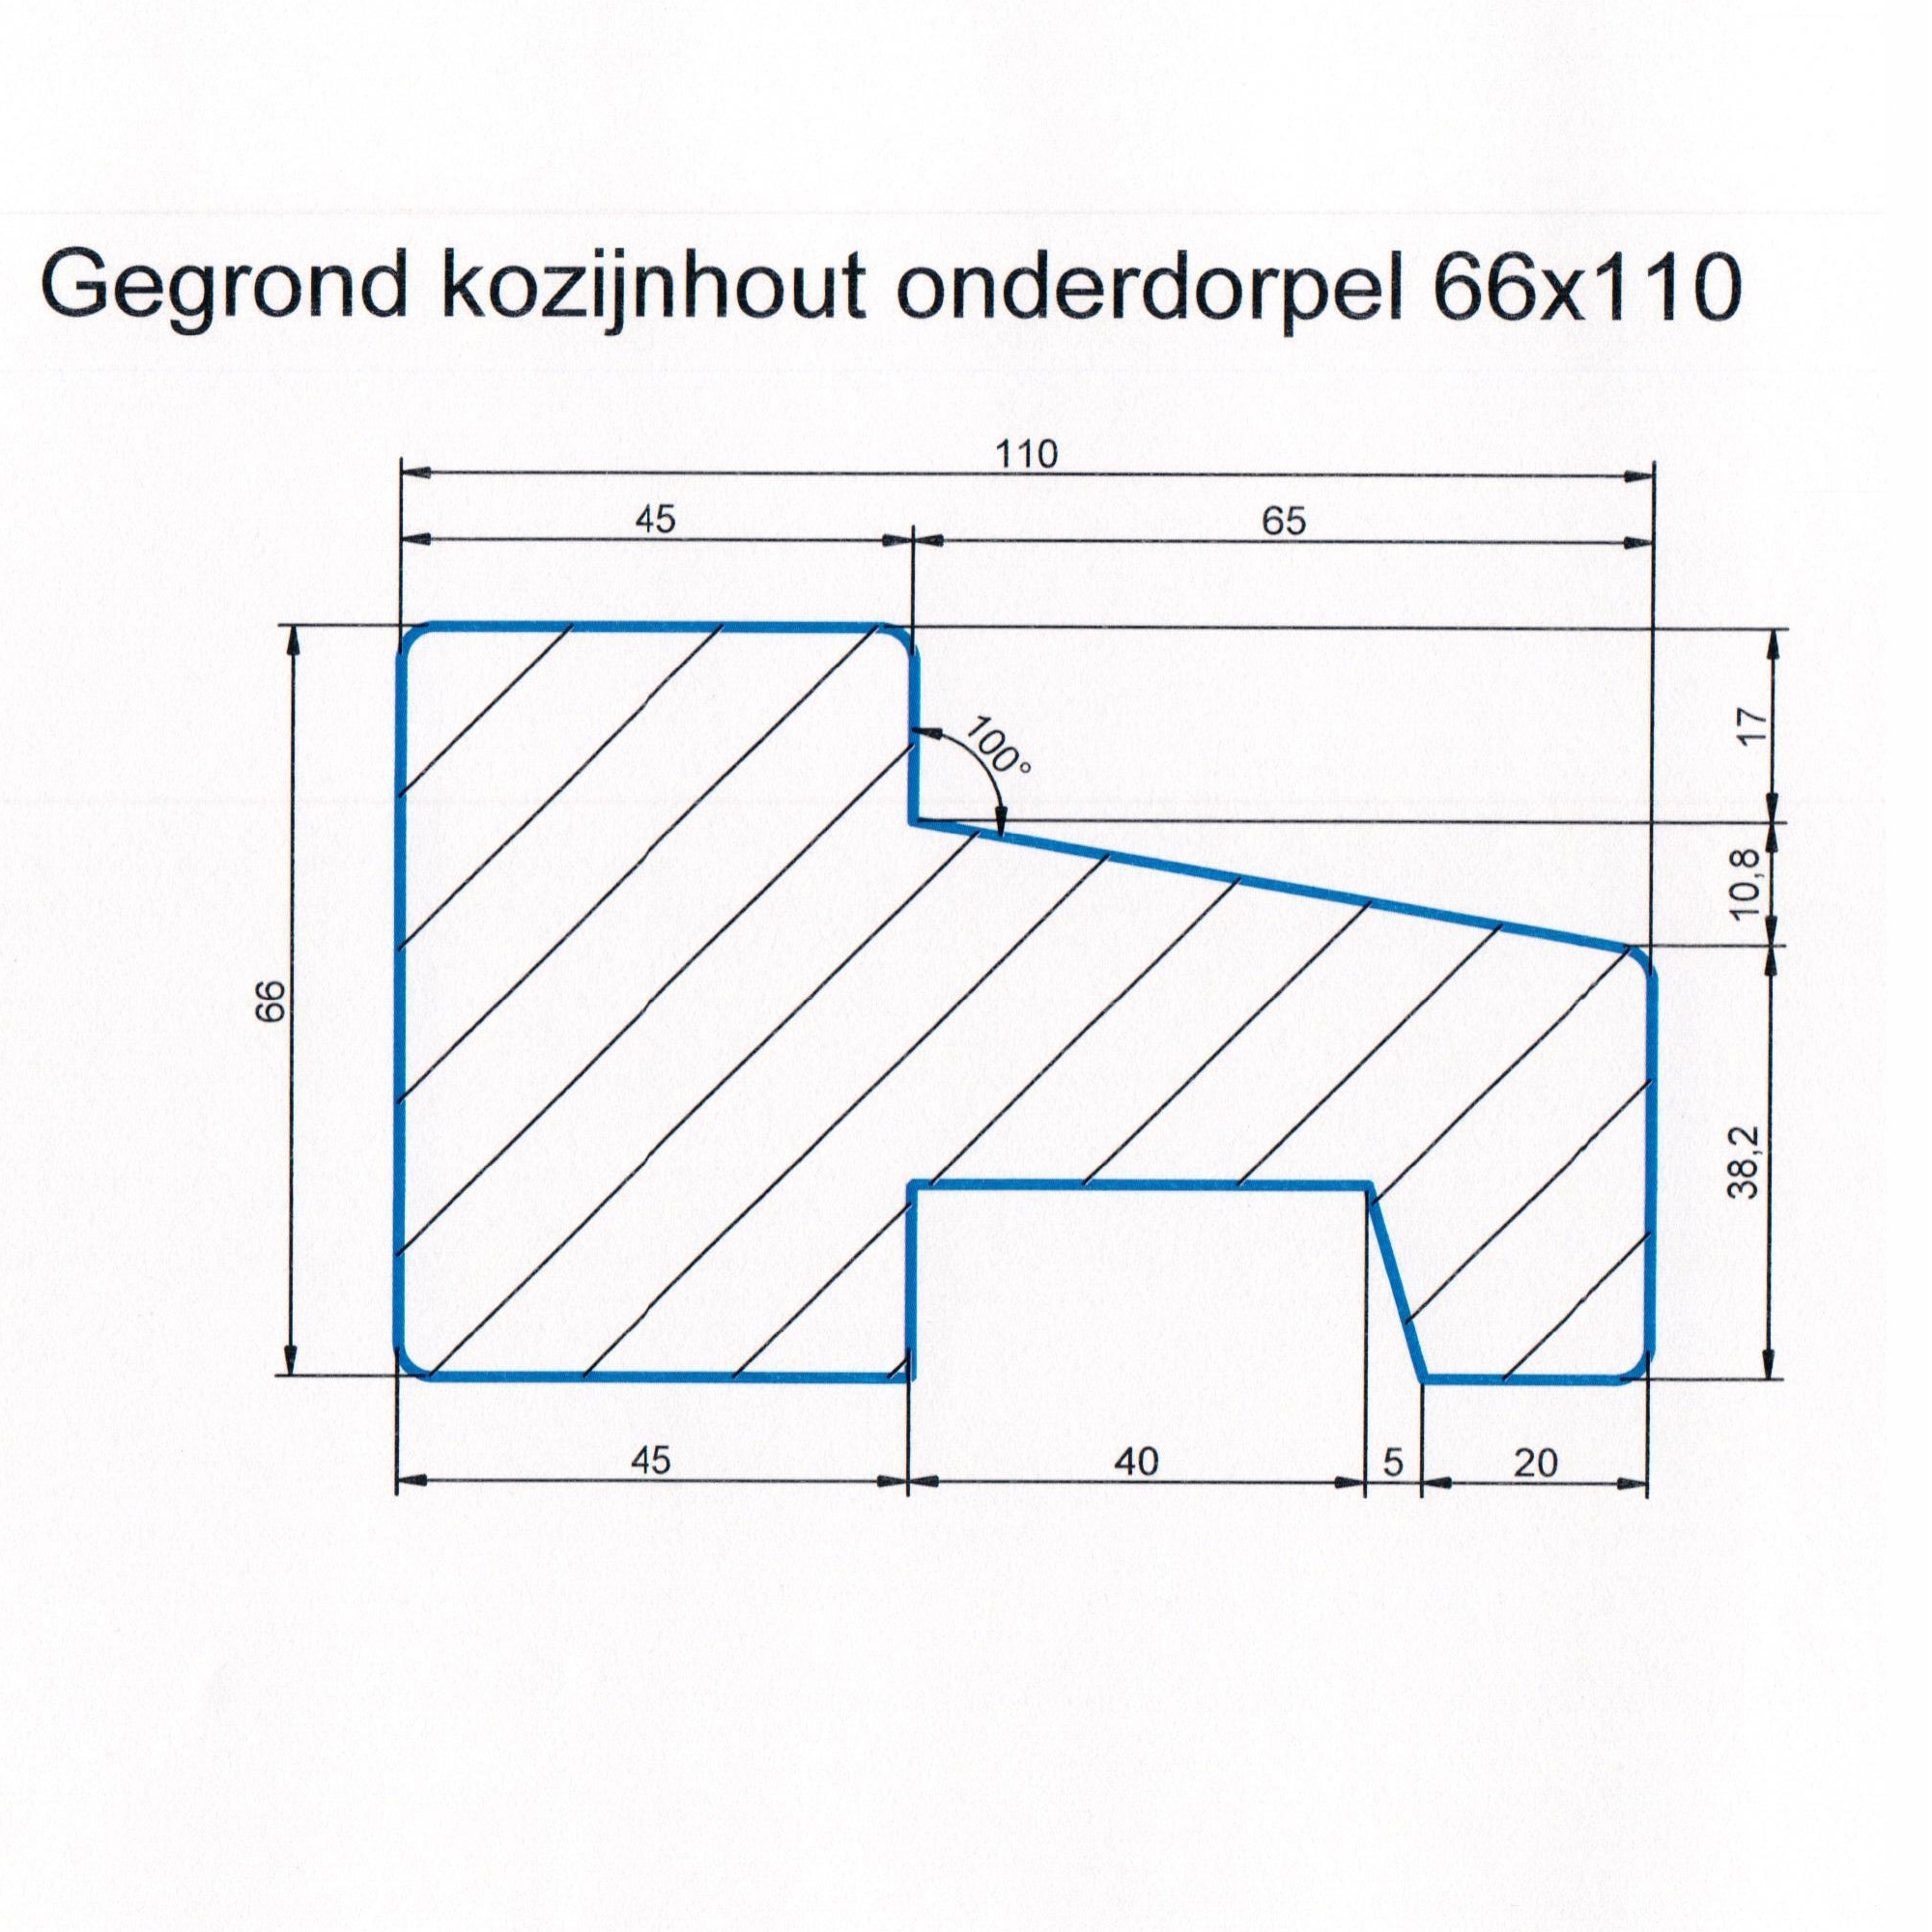 Hardhout 66x110 kozijnhout gegrond L=3540 onderdorpel